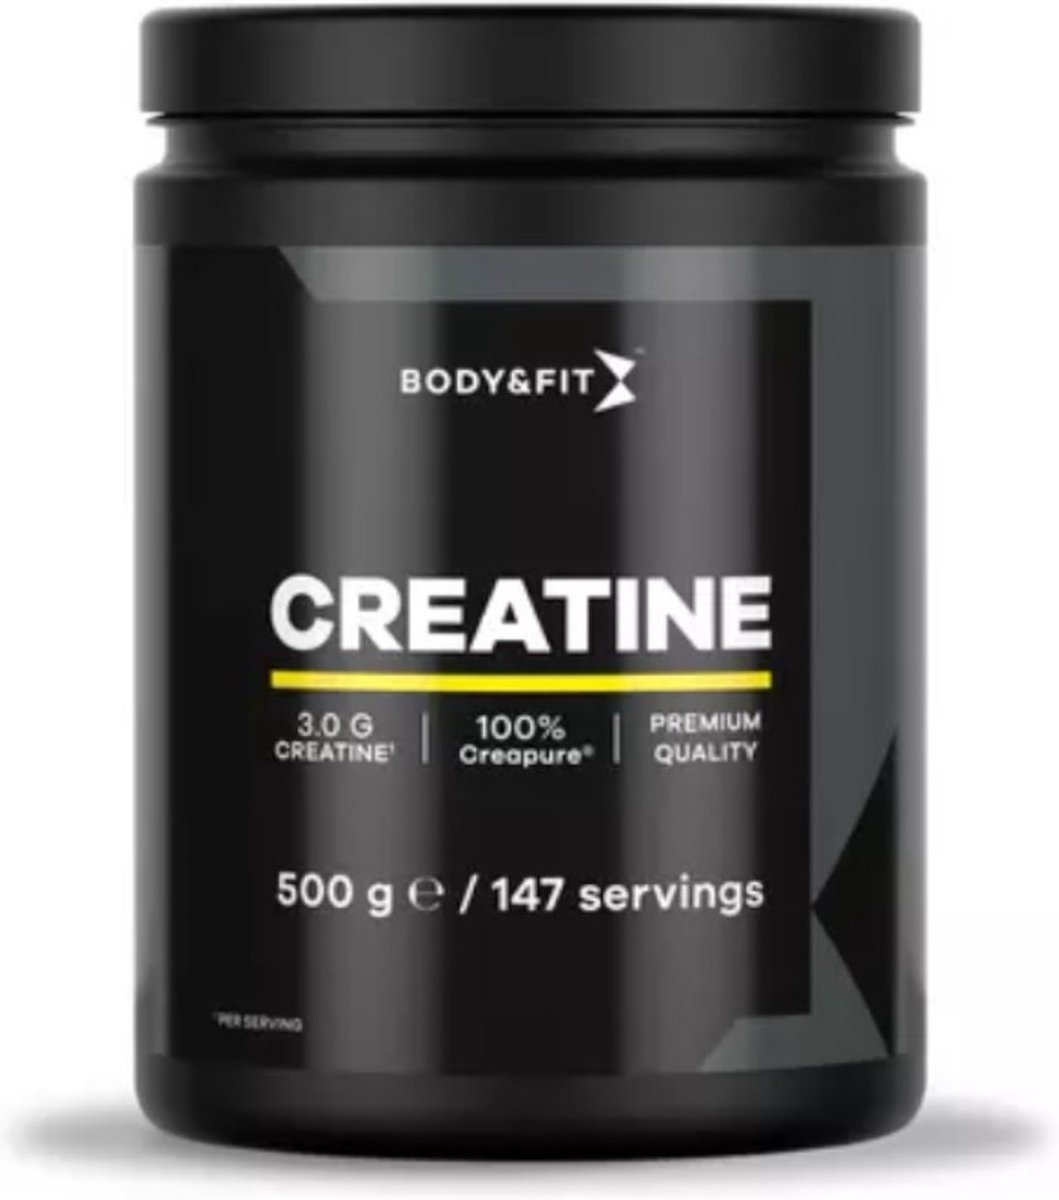 Body & Fit Creatine - CreaPure® - Monohydraat - Best Creatine Worldwide - 500 gram (147 doseringen) - Body & Fit